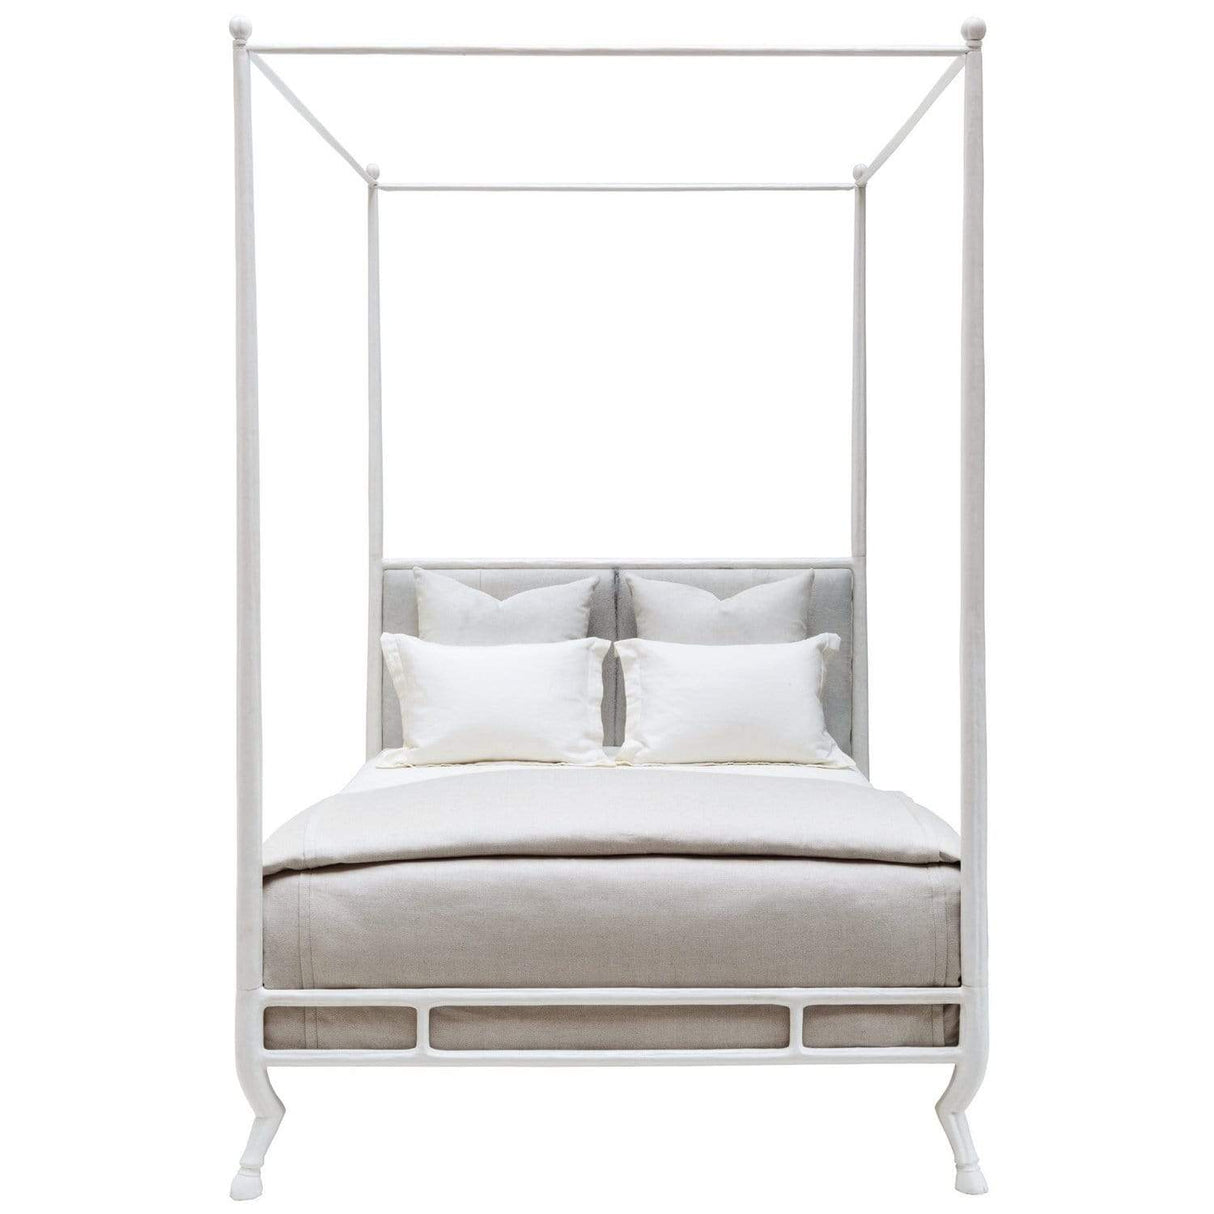 Oly Studio Faline Bed Furniture